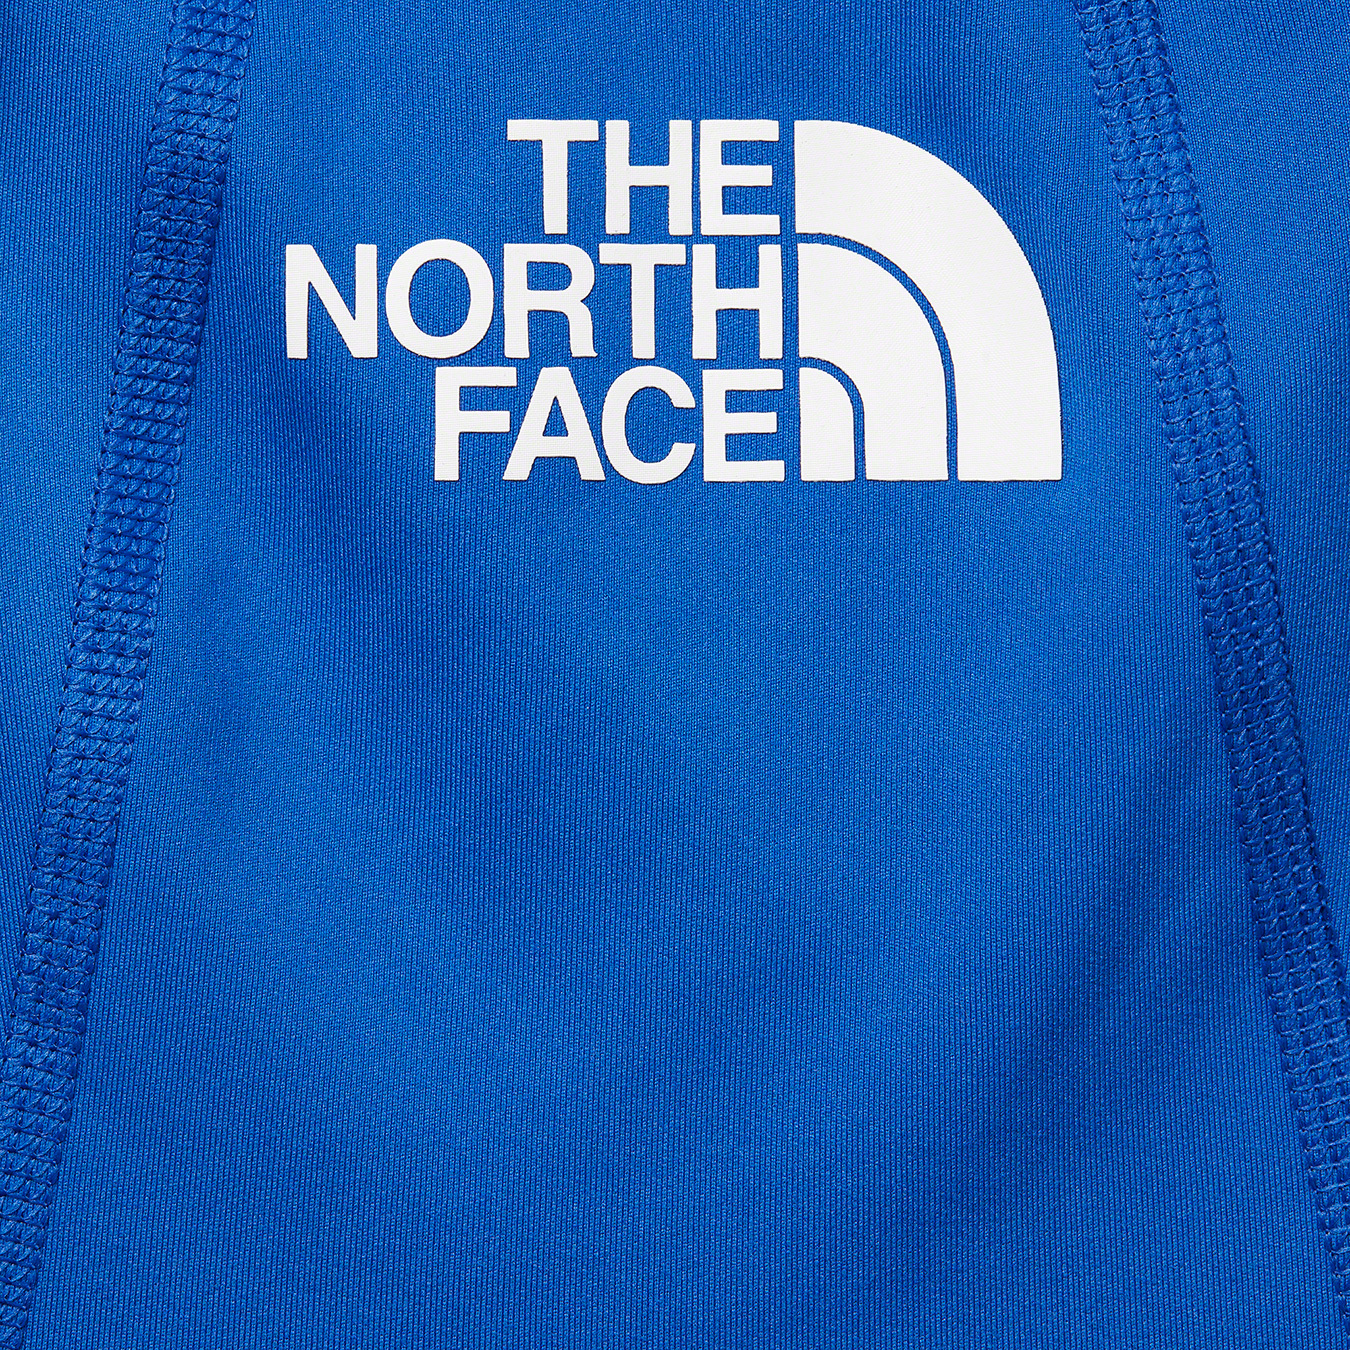 Supreme®/The North Face® Base Layer L/S Top